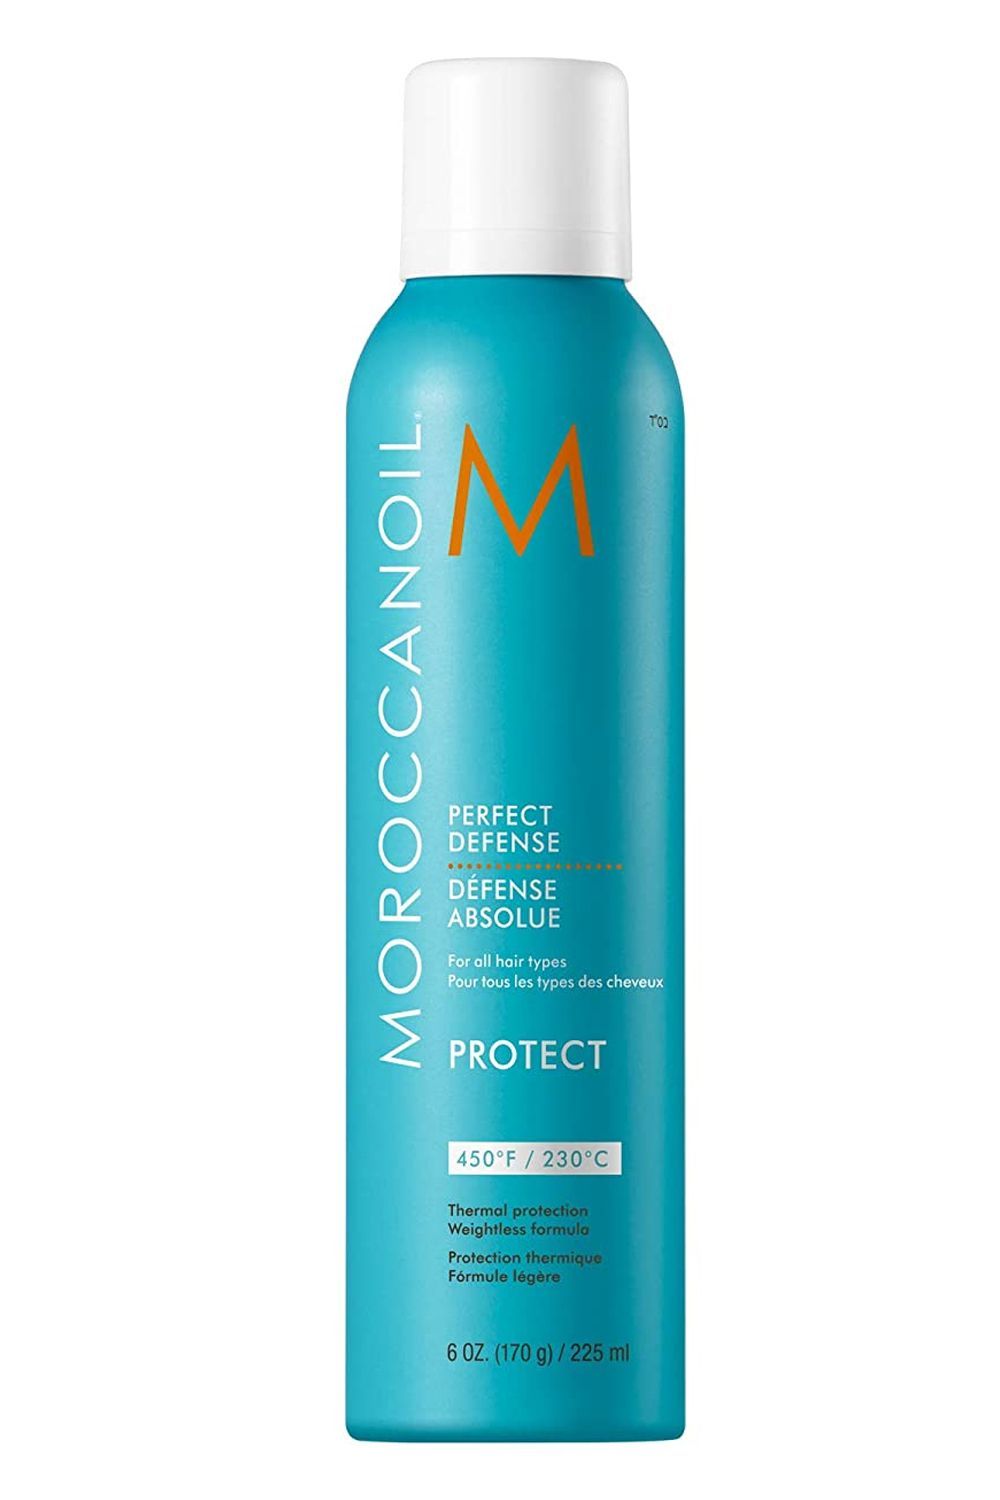 Heat Protector Spray | Protect Hair From Heat Damage | Sun Bum